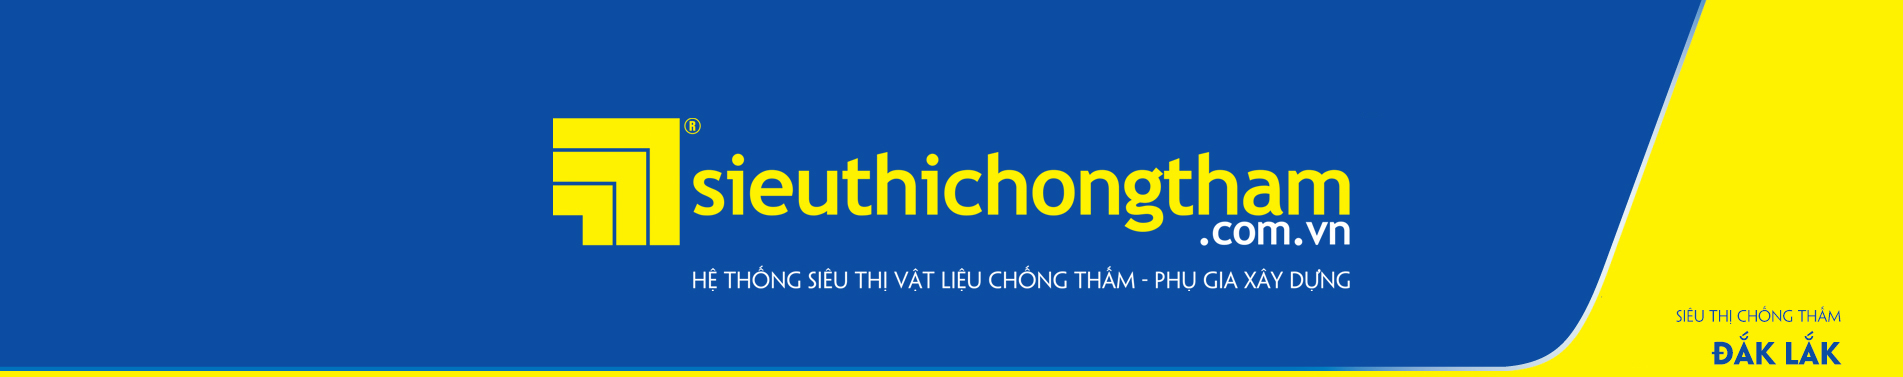 Sieu Thi Chong Tham Dak Lak